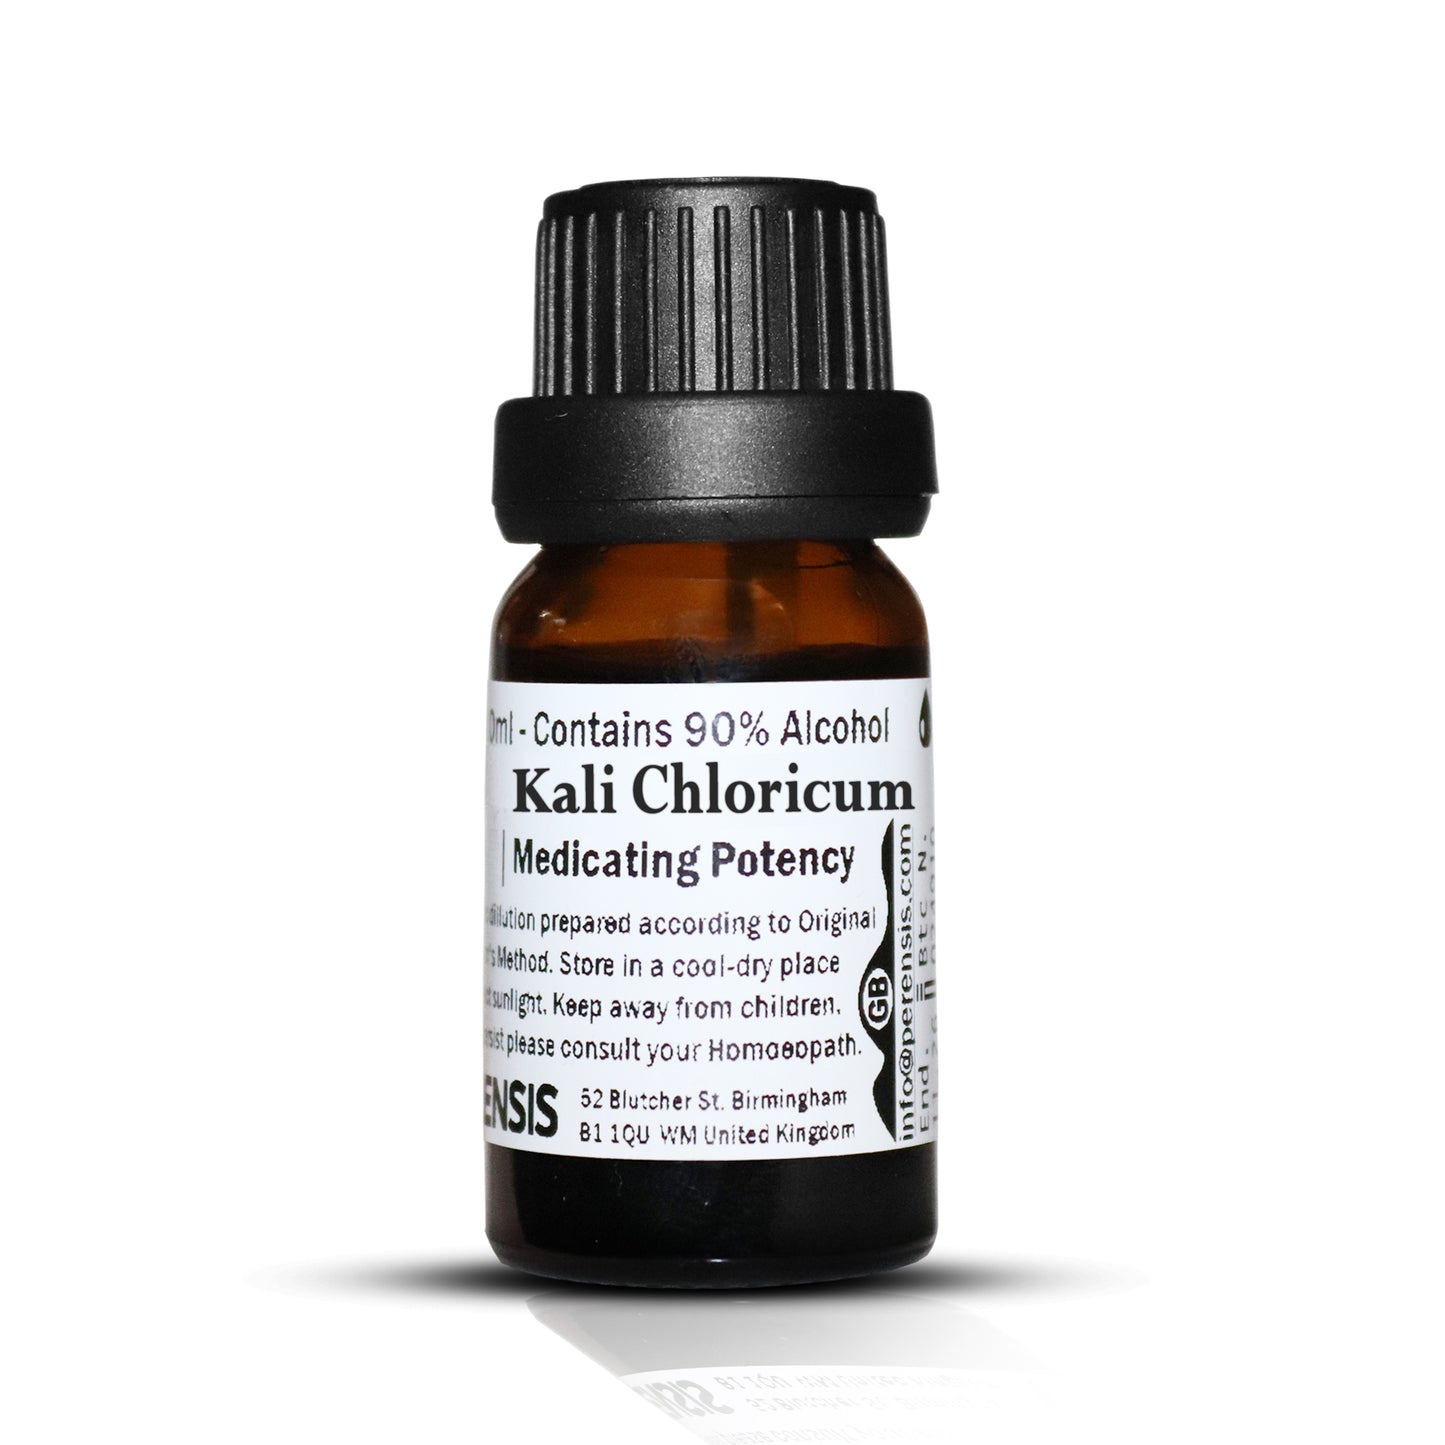 Kali Chloricum